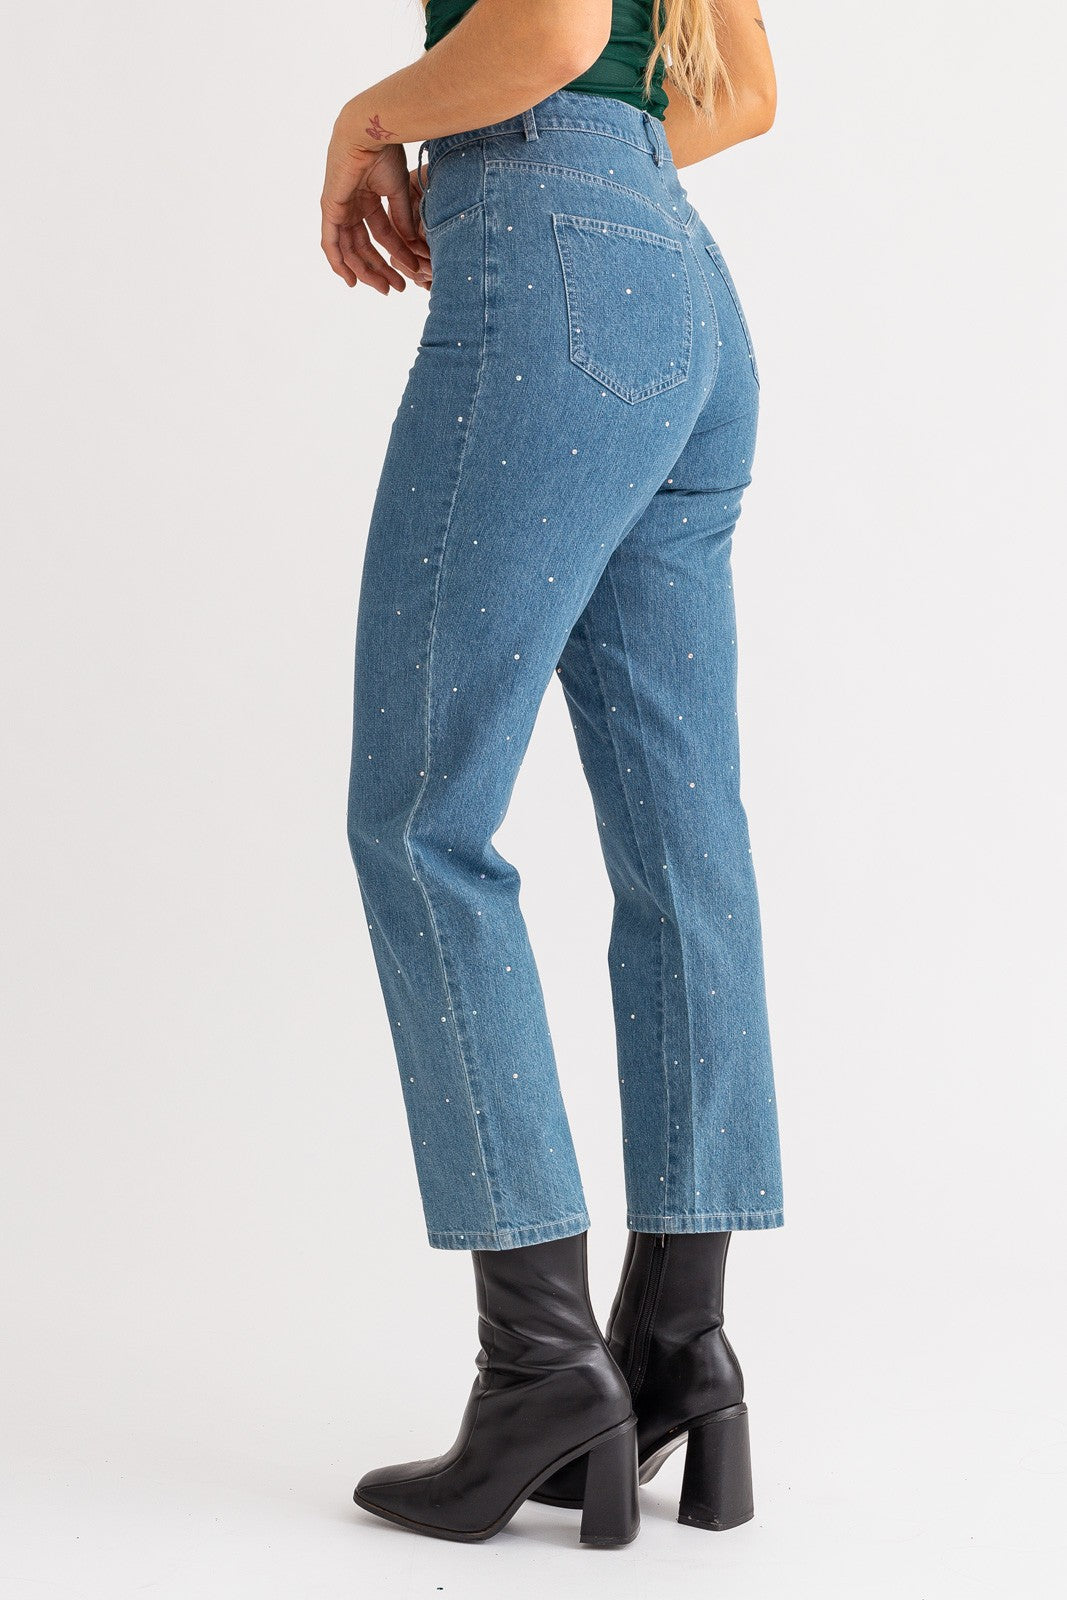 Coastal Cowgirl Rhinestone Jeans